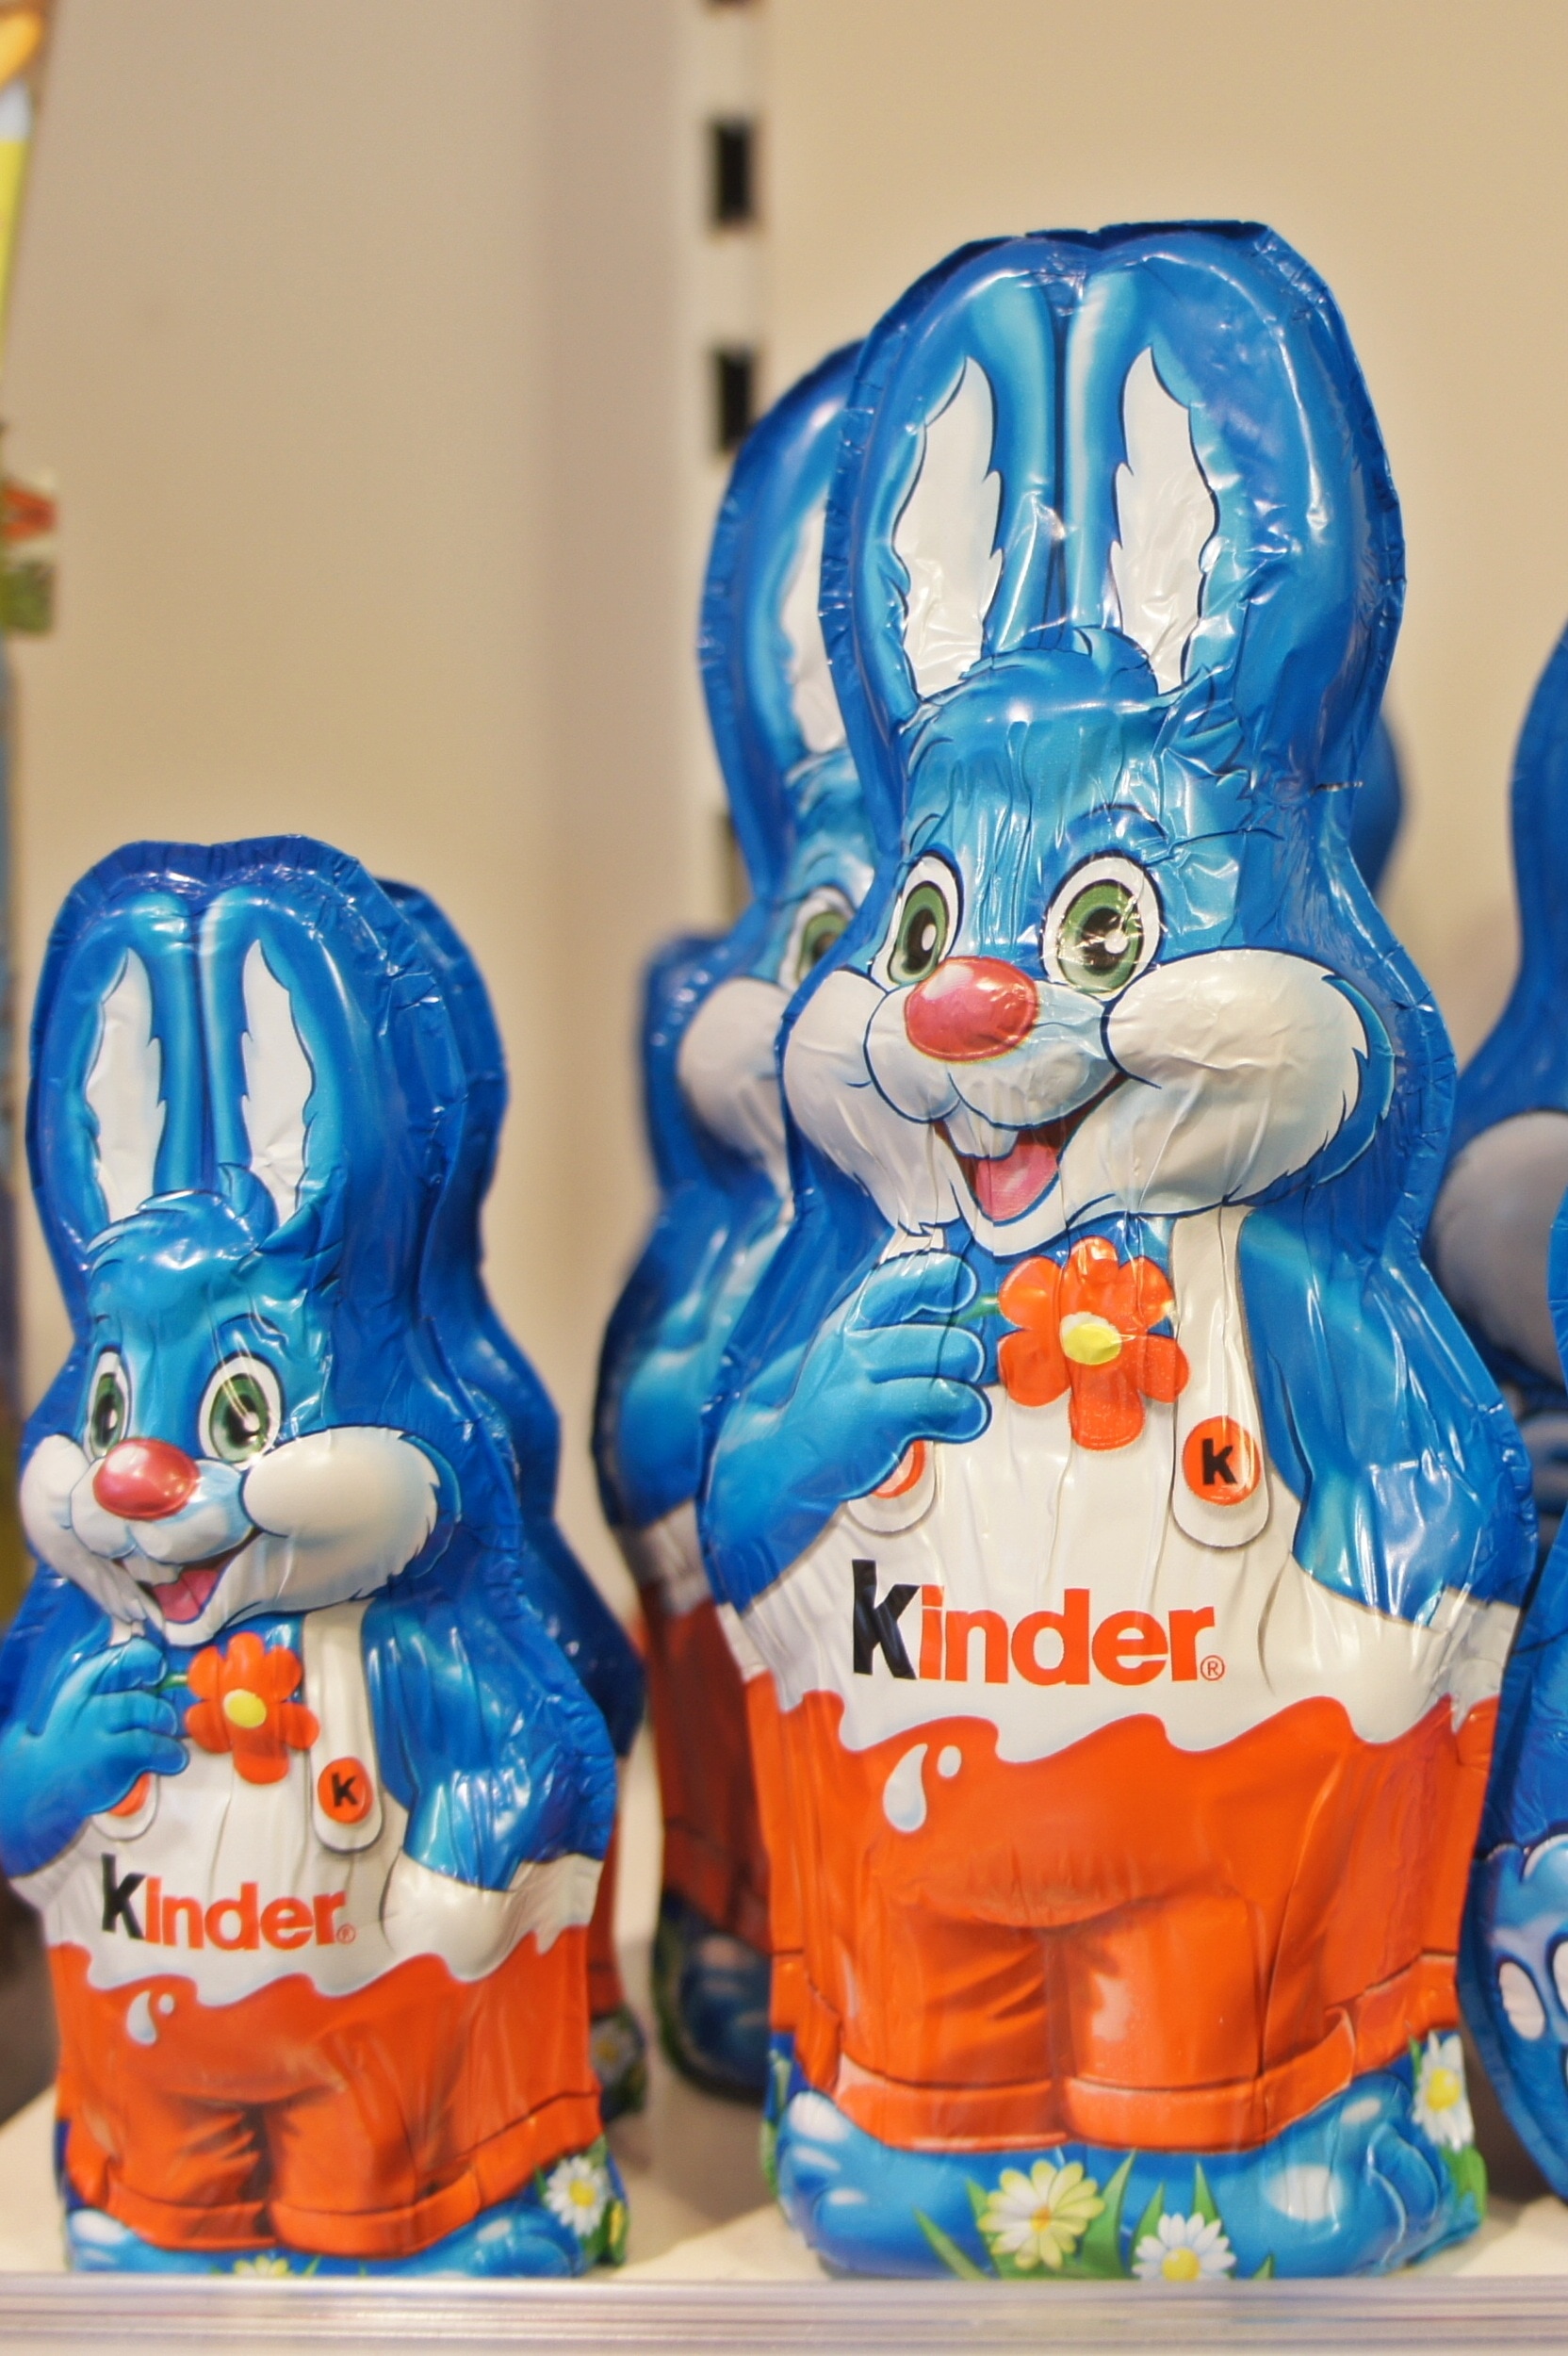 kinder bunny plastic packs